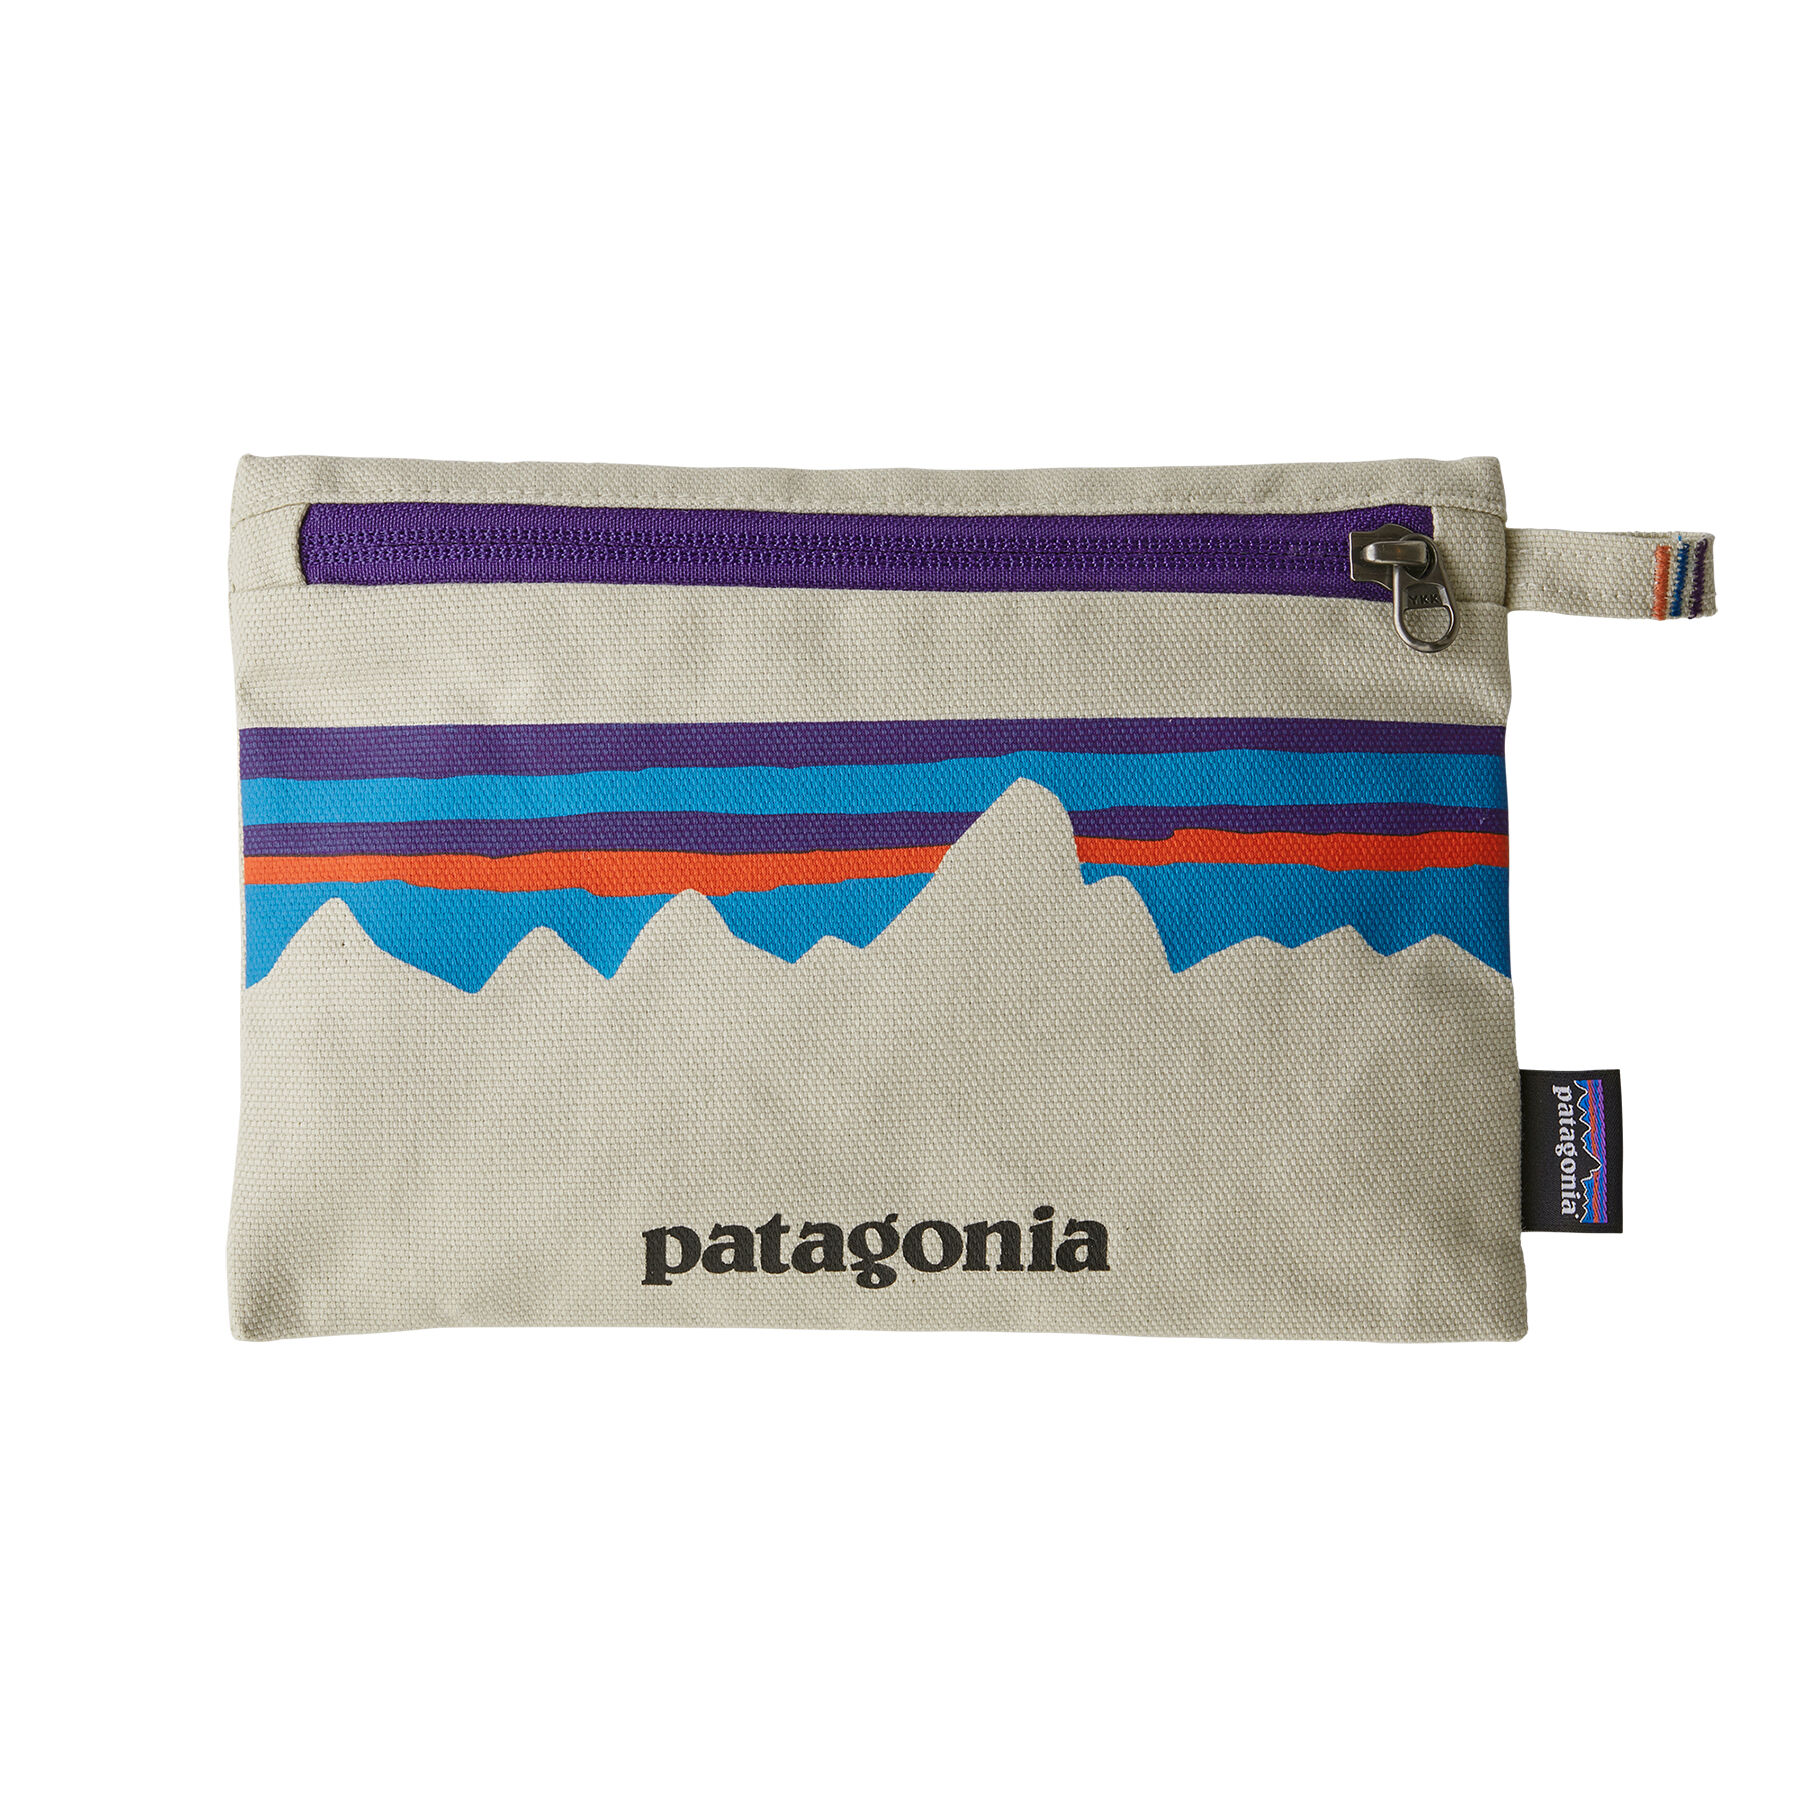 Patagonia Zippered Pouch - Bolsa de mano